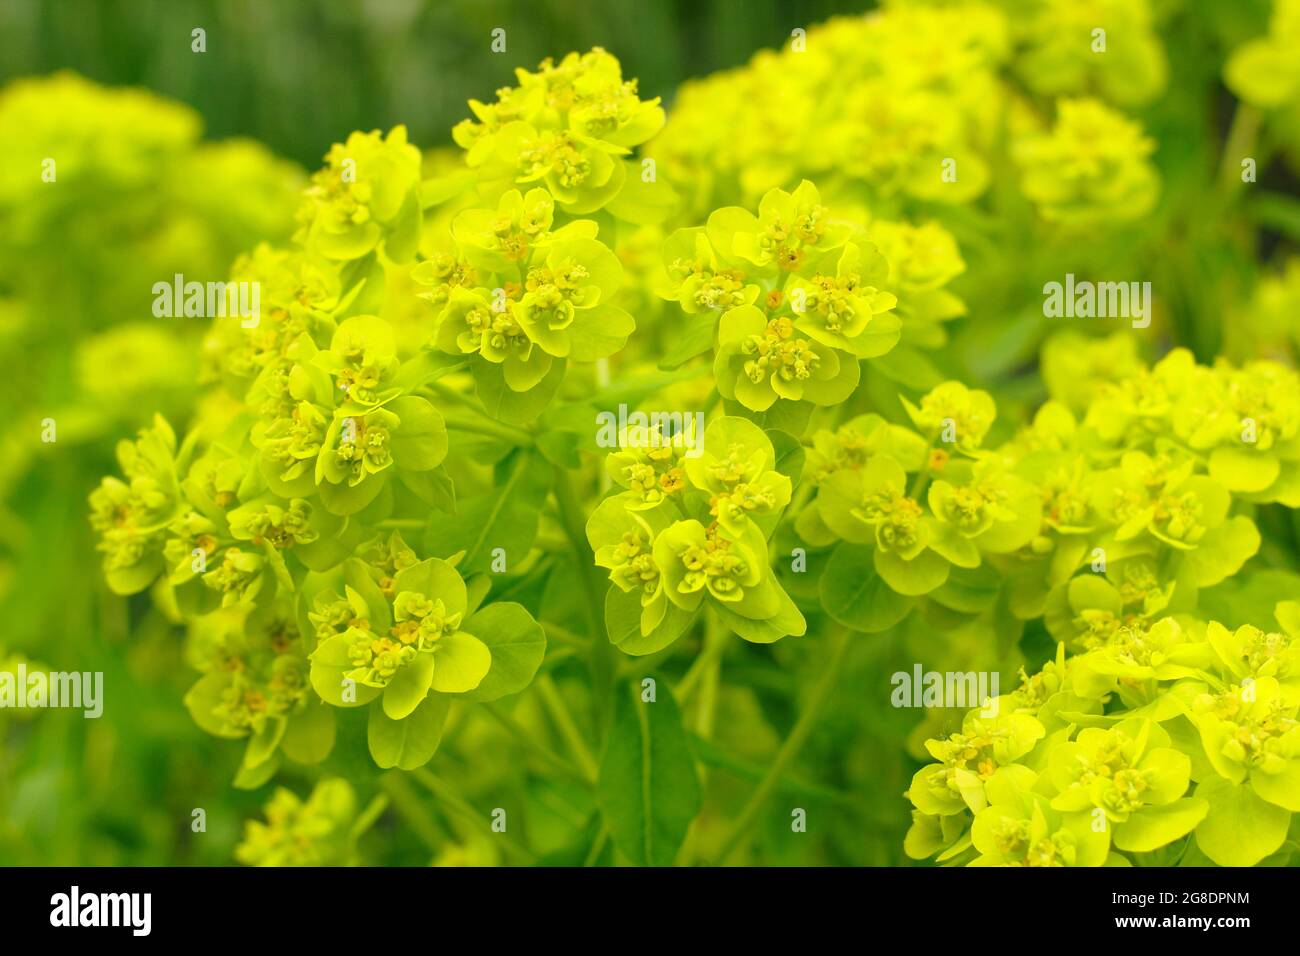 Euphorbia palustris - marsh spurge - in a garden border displaying characteristic acid green flower clusters. UK Stock Photo